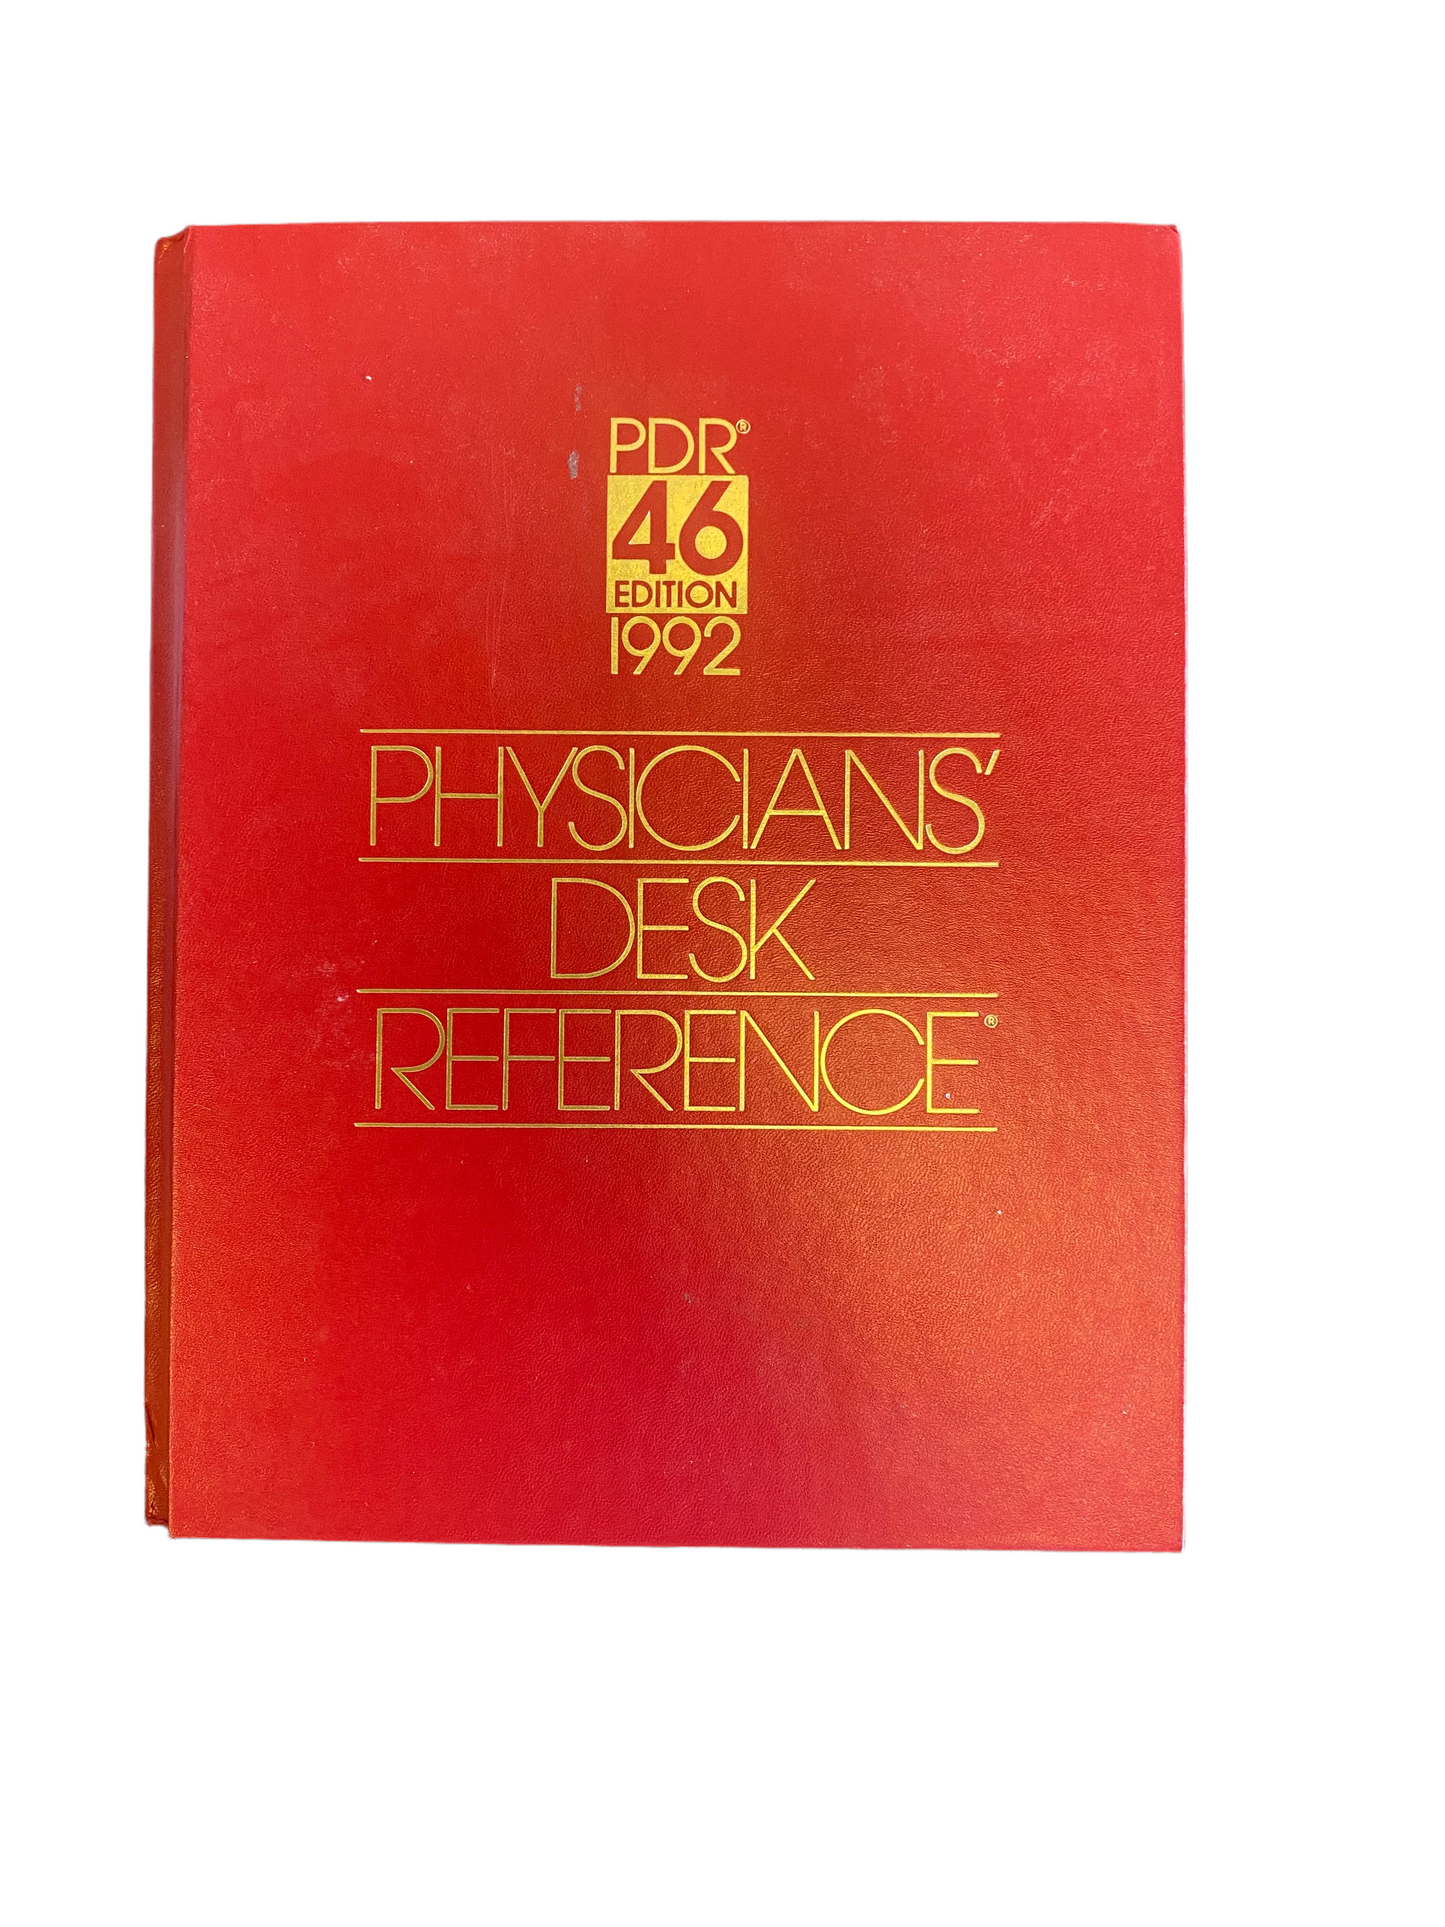 Vintage 1992 PHYSICIANS’ DESK REFERENCE Hardback Book 46th Edition Published By Medical Economics Data